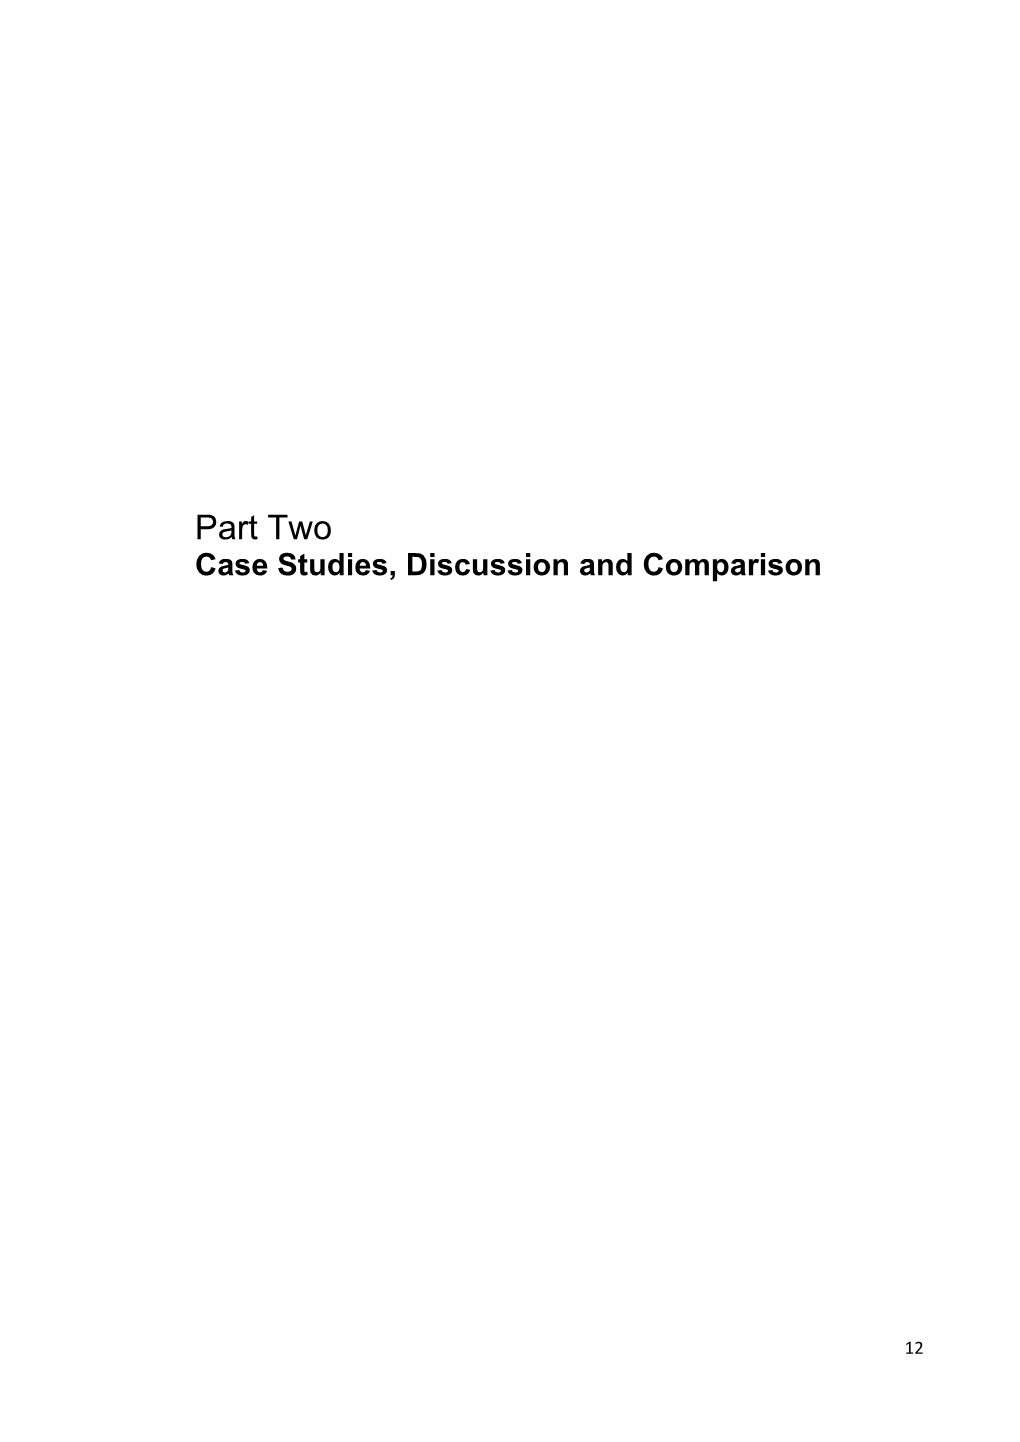 Part Two Case Studies, Discussion and Comparison